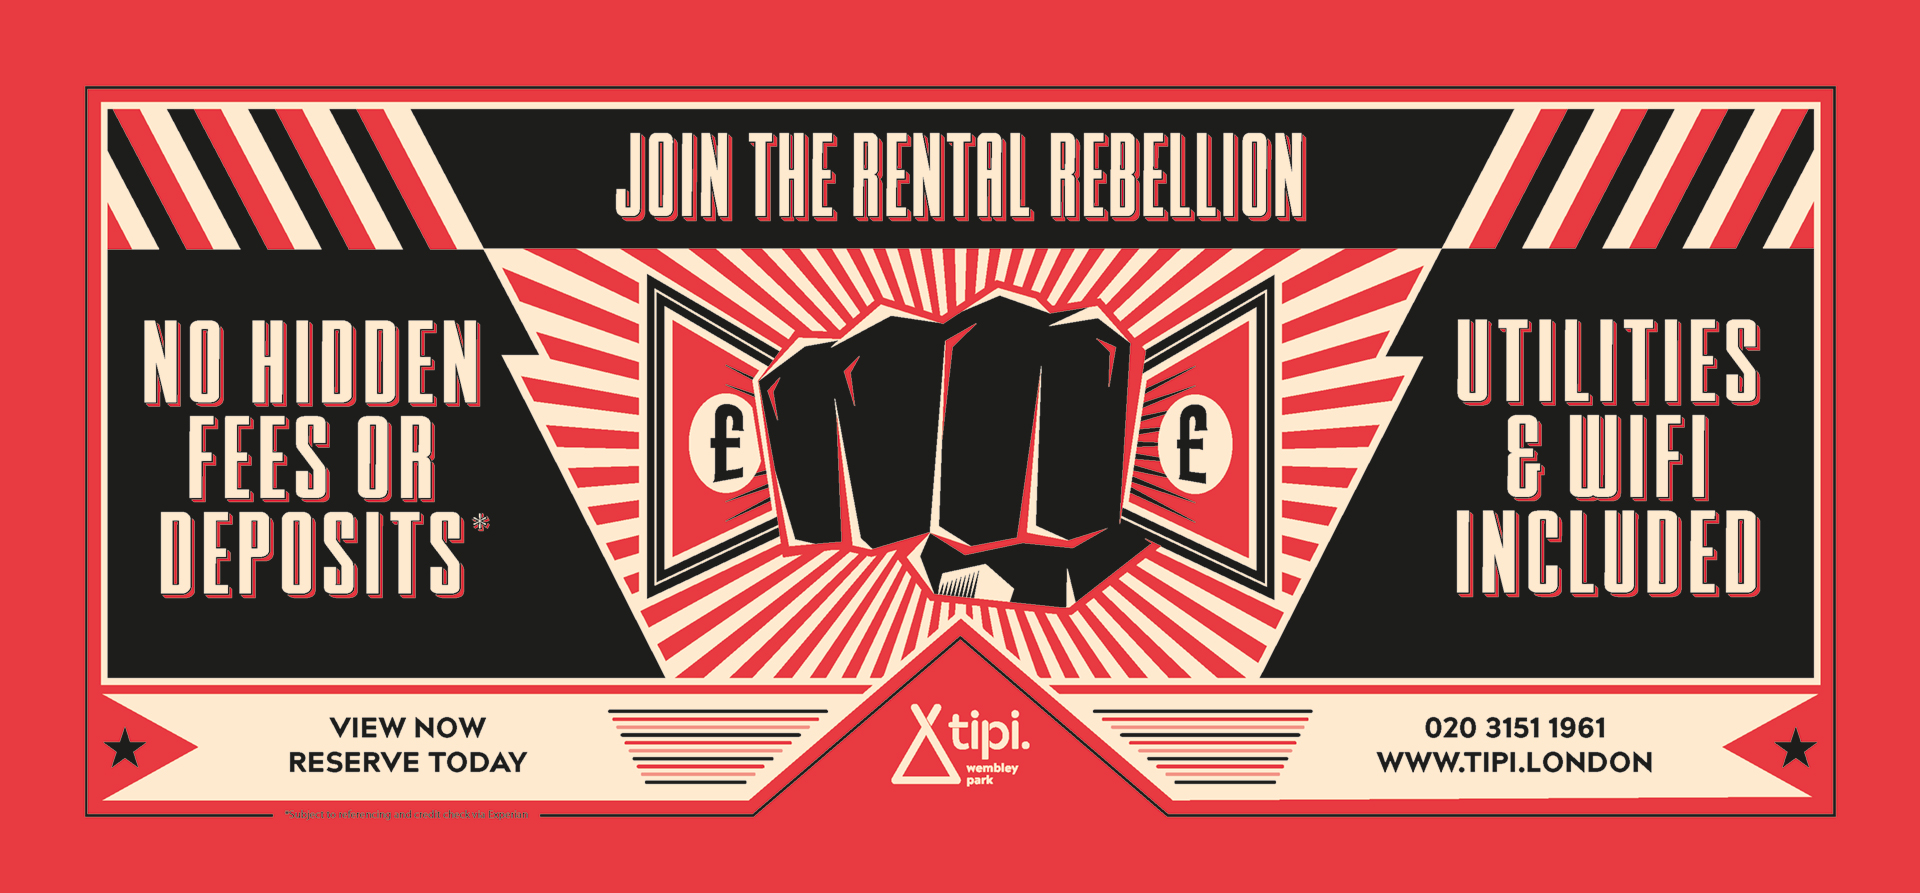 Join the Rental Rebellion